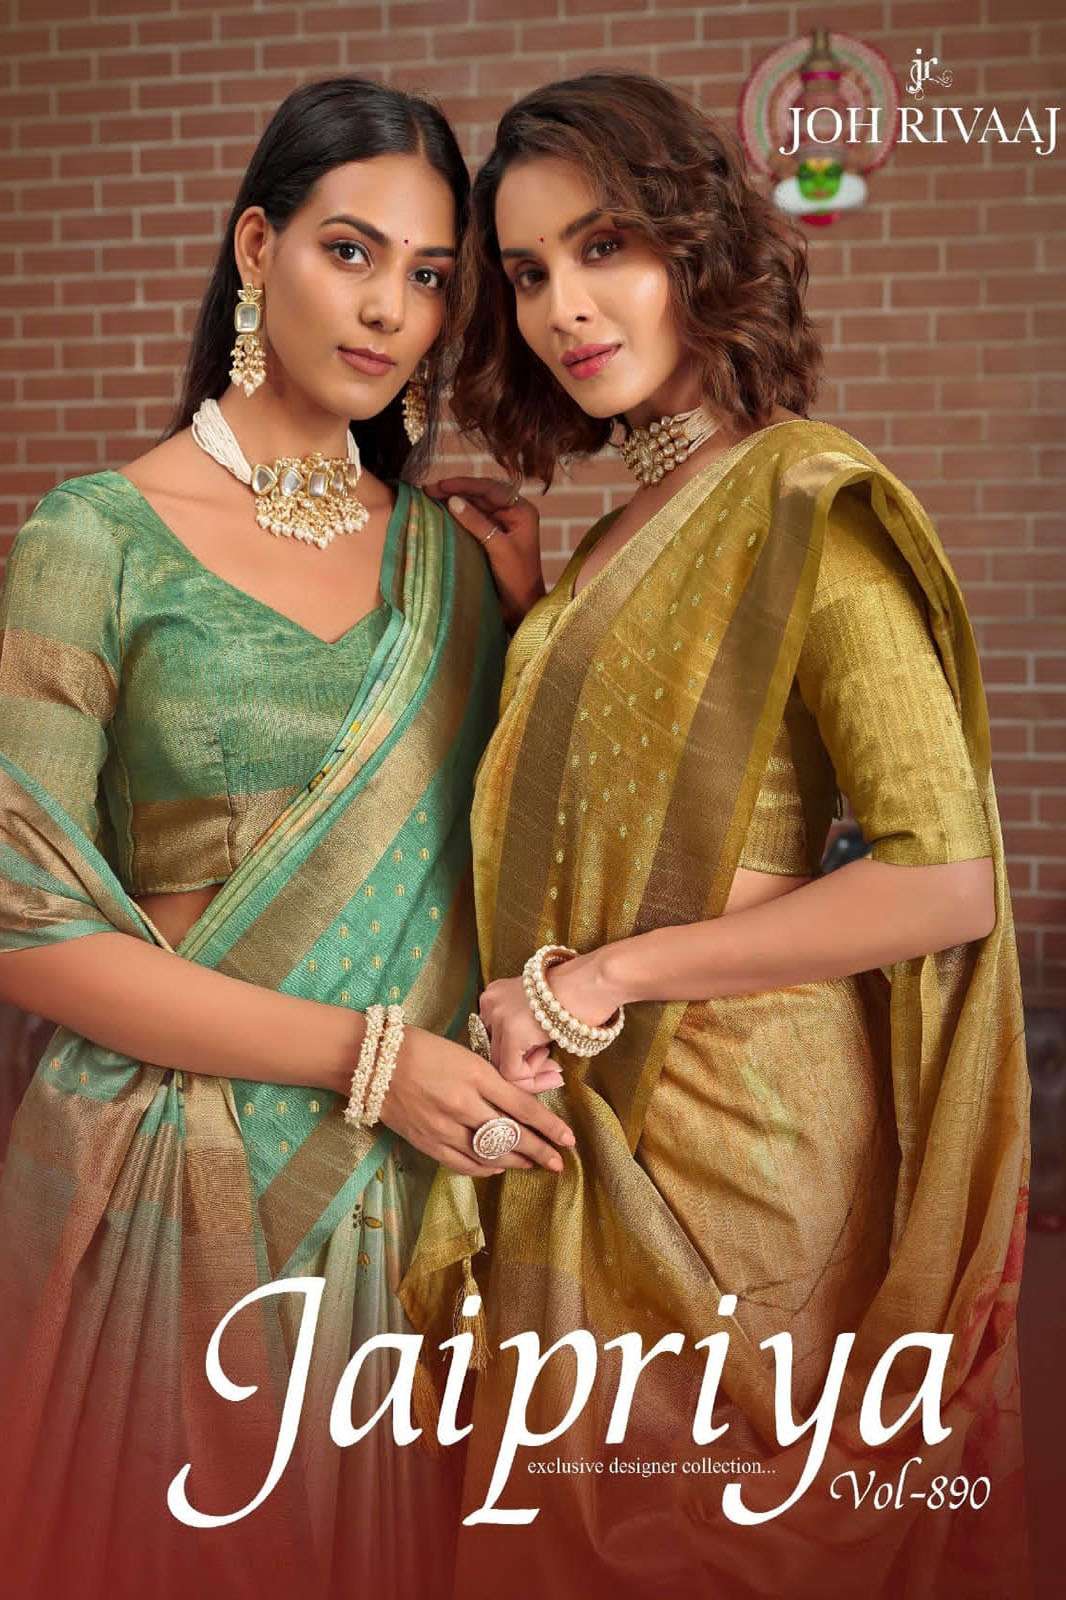 Joh Rivaaj Jaipriya Vol-890 Presents Latest Designer Fancy  Chappa Silk Saree Collection For Womens